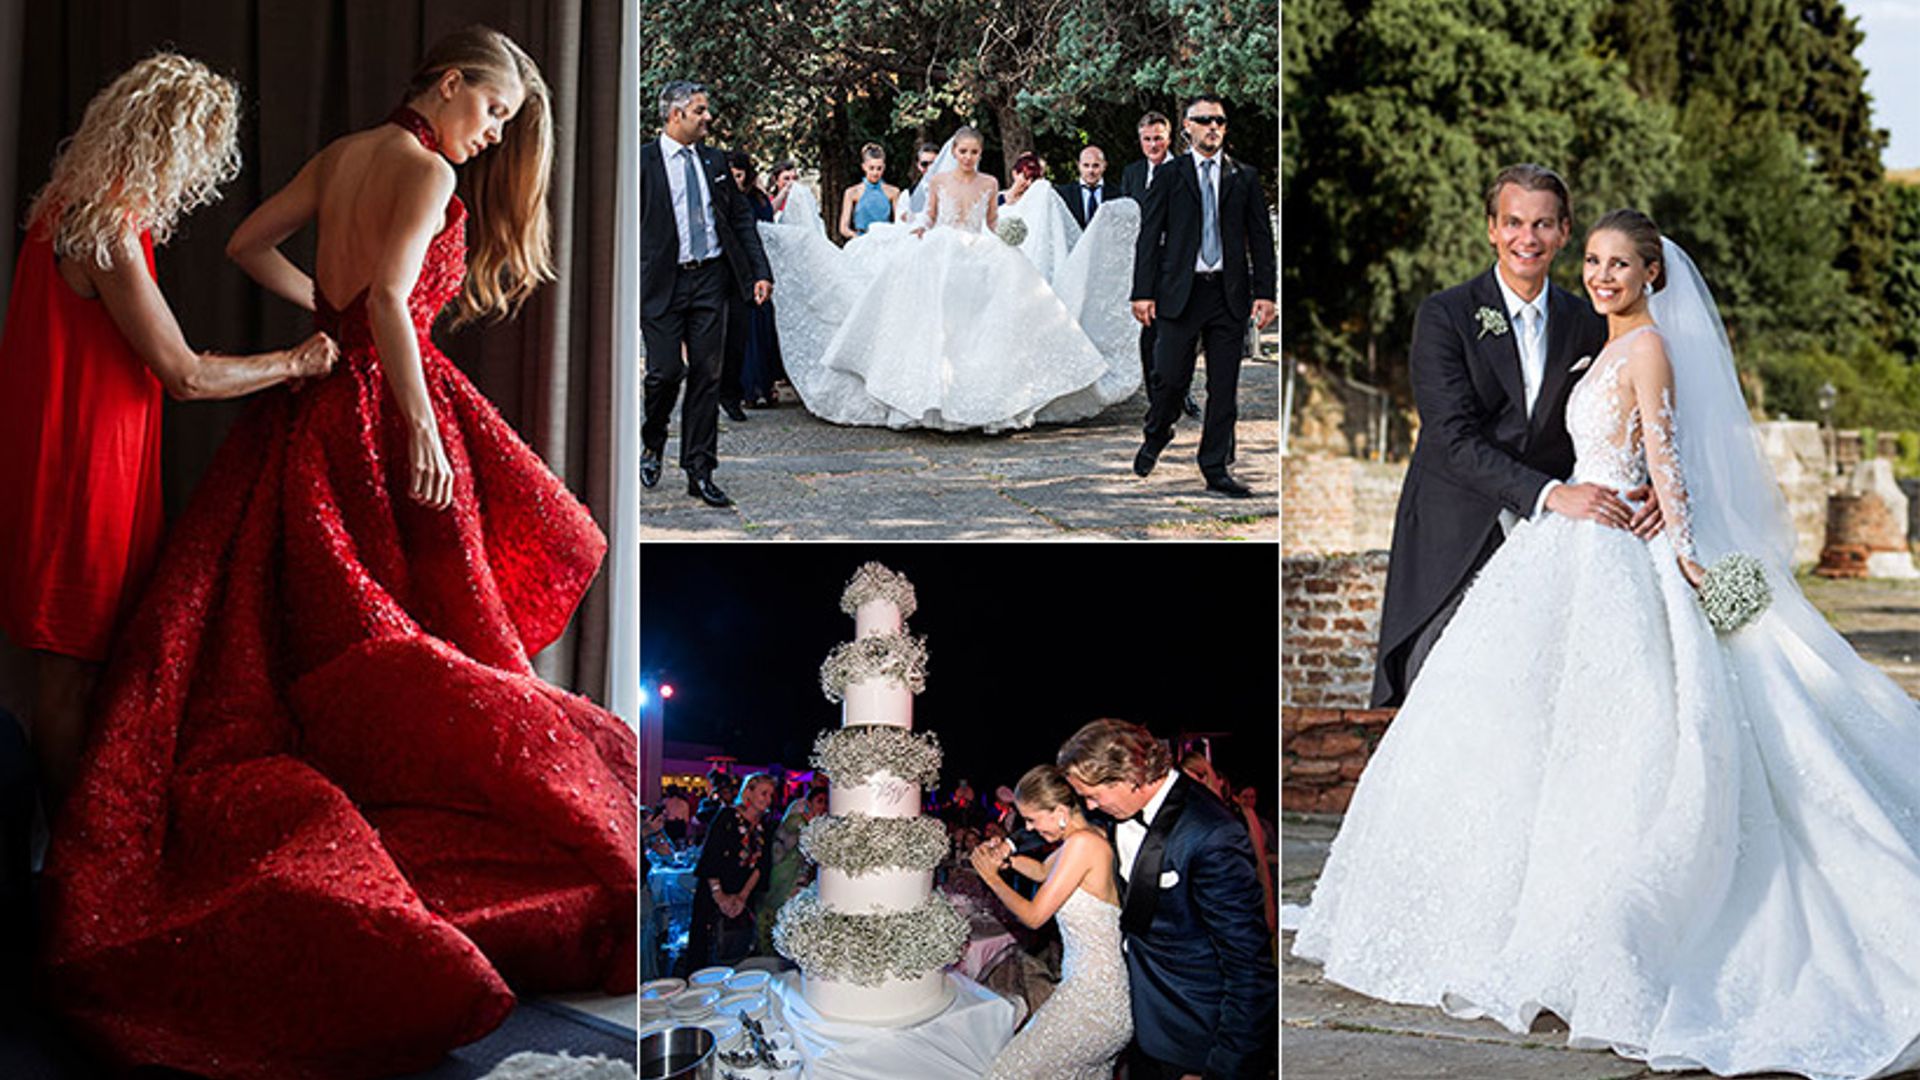 The million dollar Swarovski wedding dress that is breaking the internet